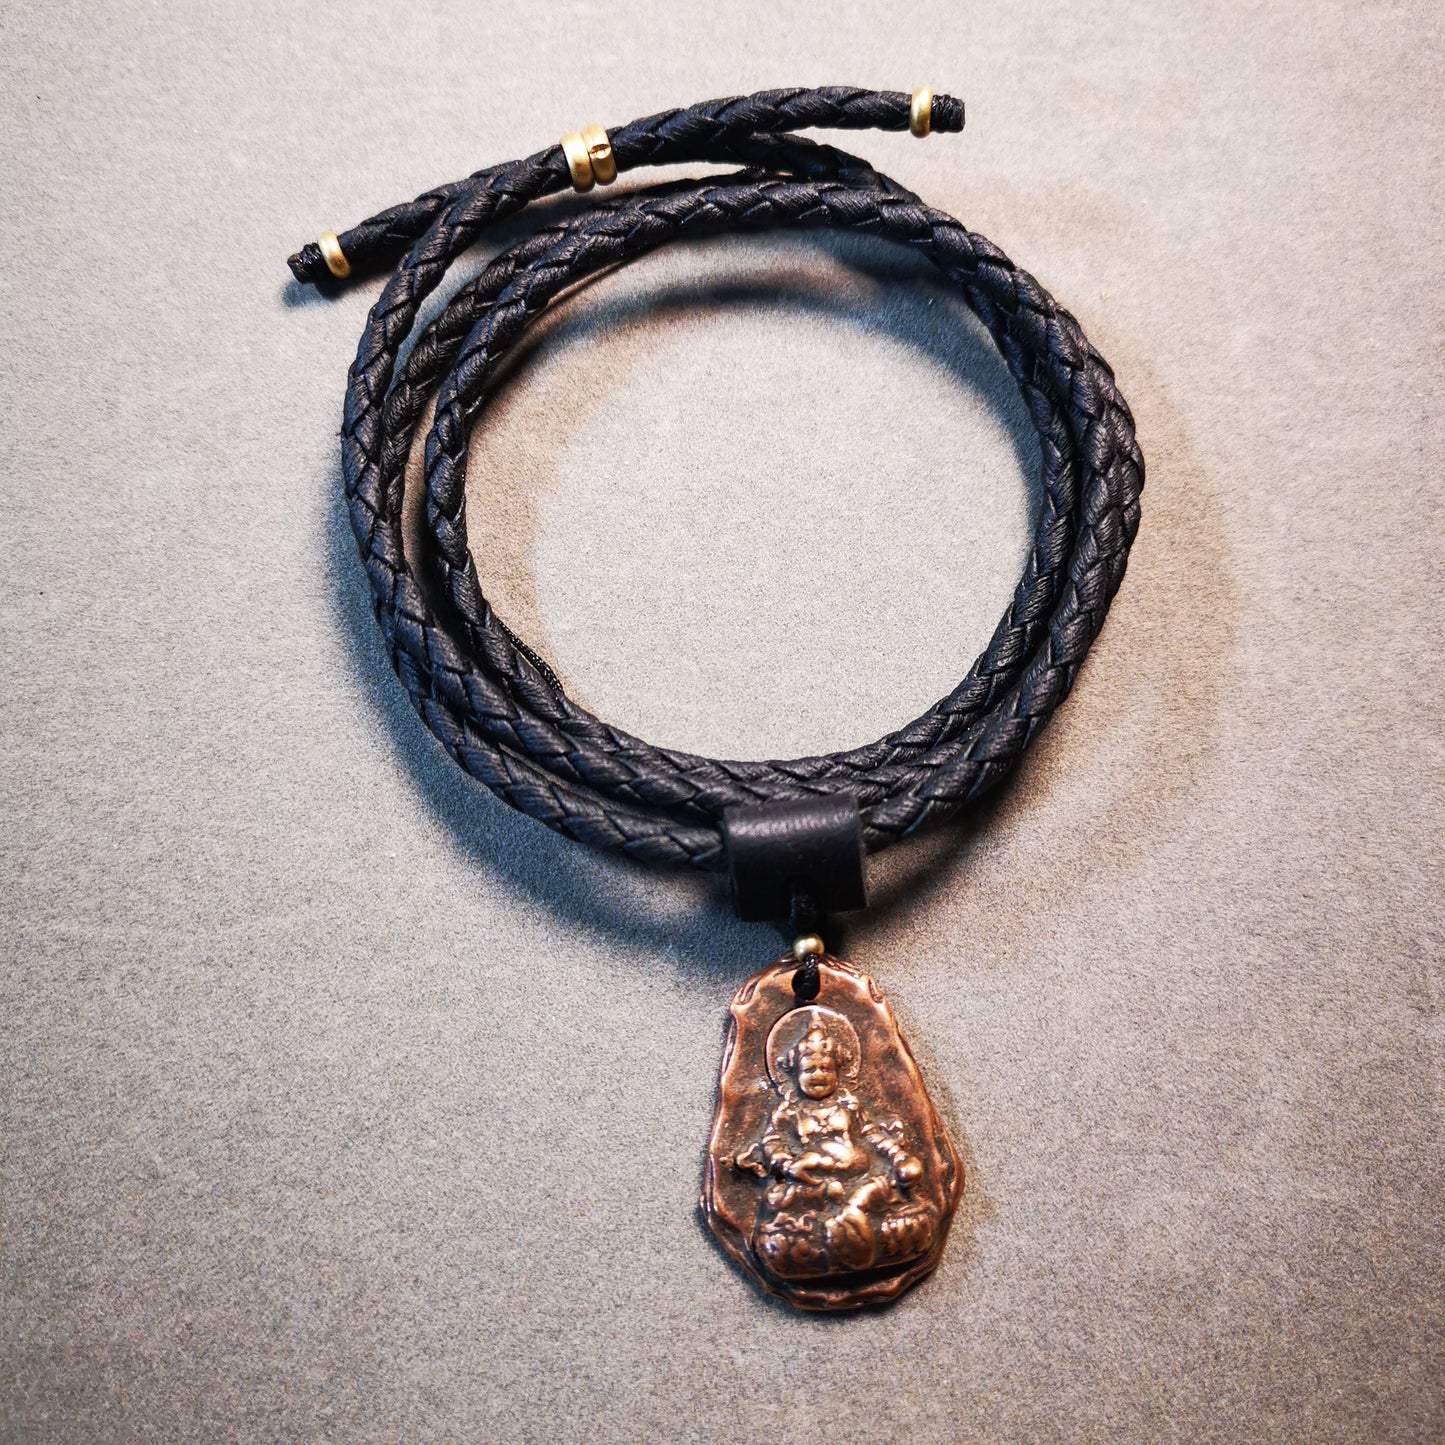 Gandhanra Handmade Amulet,Yellow Jambhala Pendant with Leather Necklace,Made of Brass